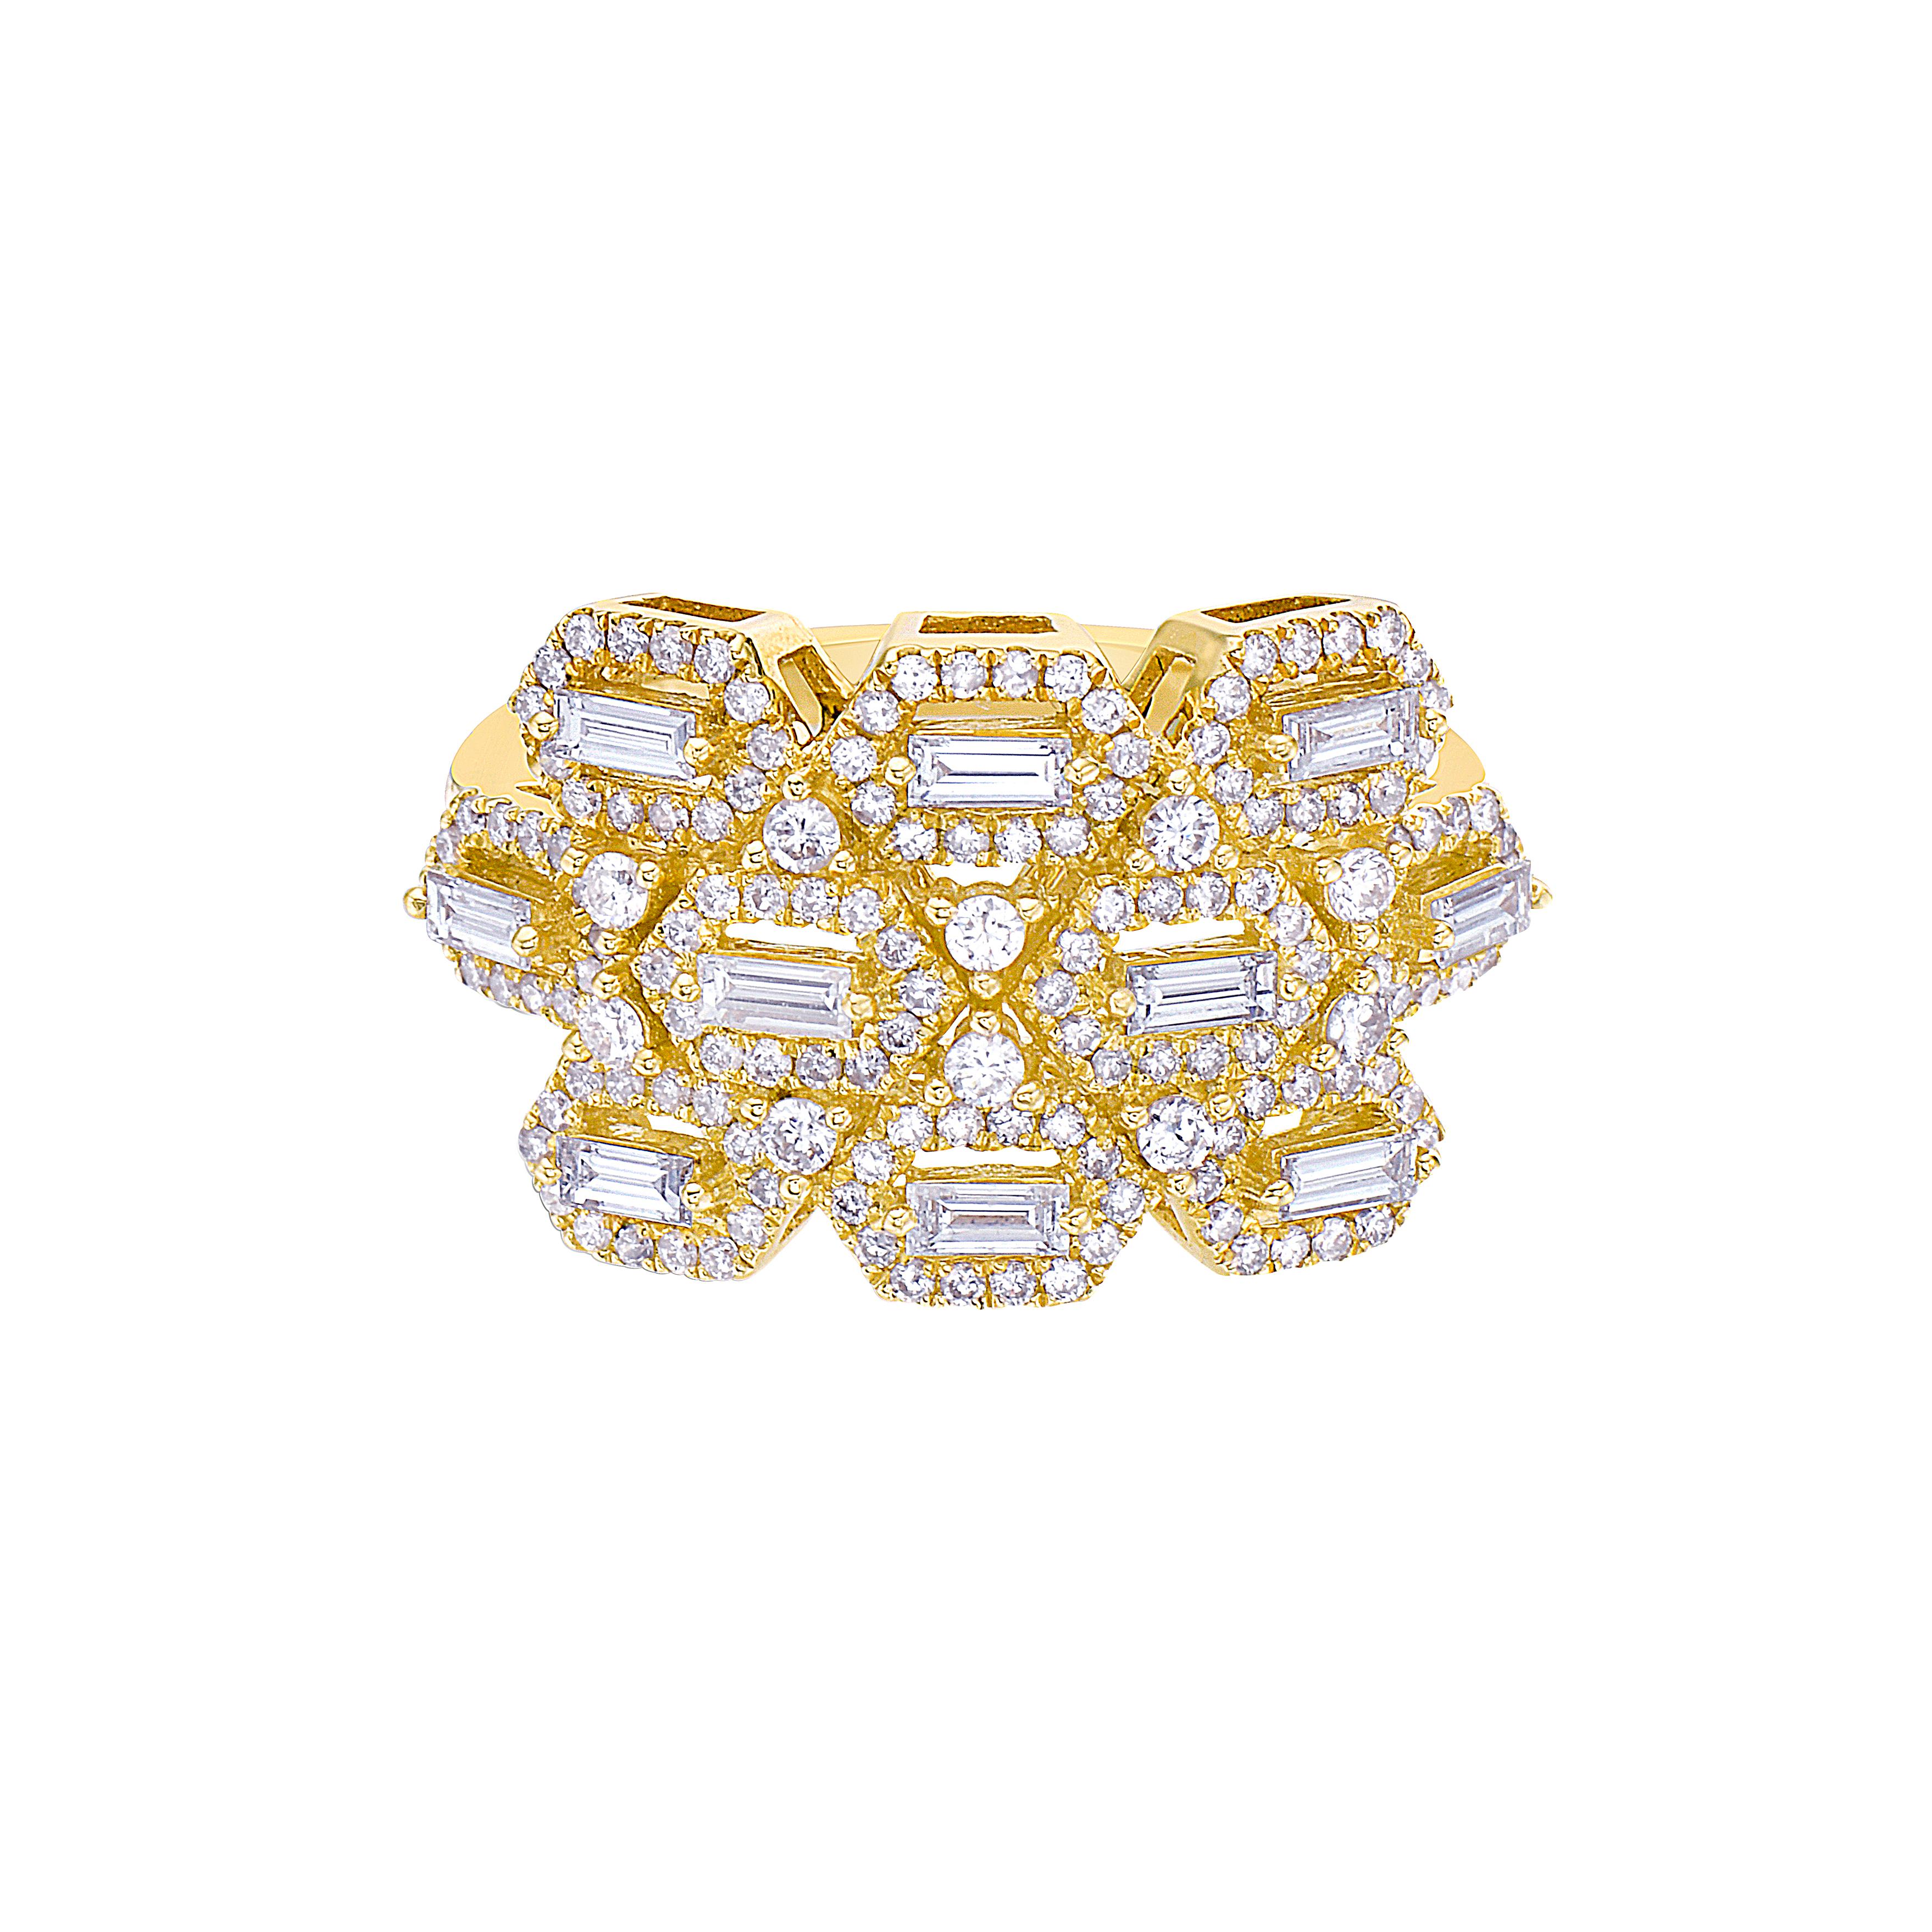 18K Yellow Gold
Diamond- 1.04 Cts